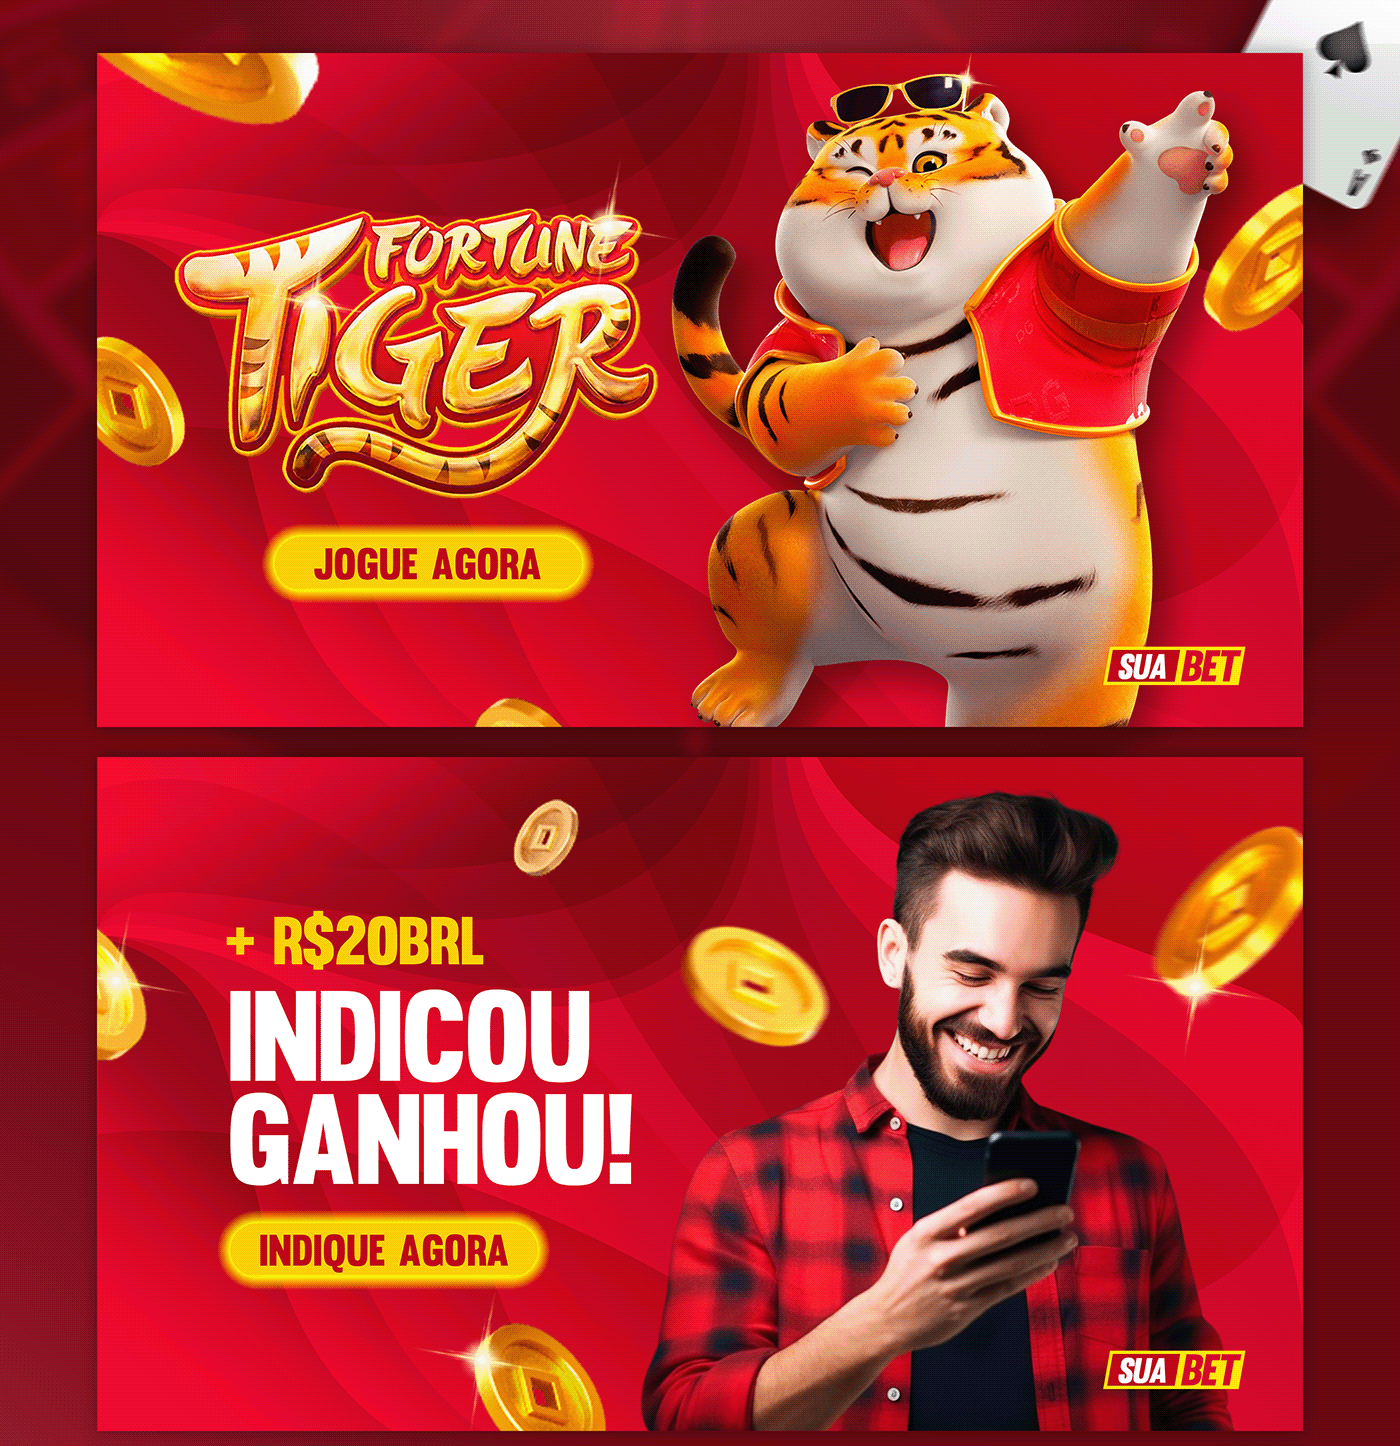 Banner Site betting Slots casino banner PG Soft plataforma betting banner casino social media fortune tiger